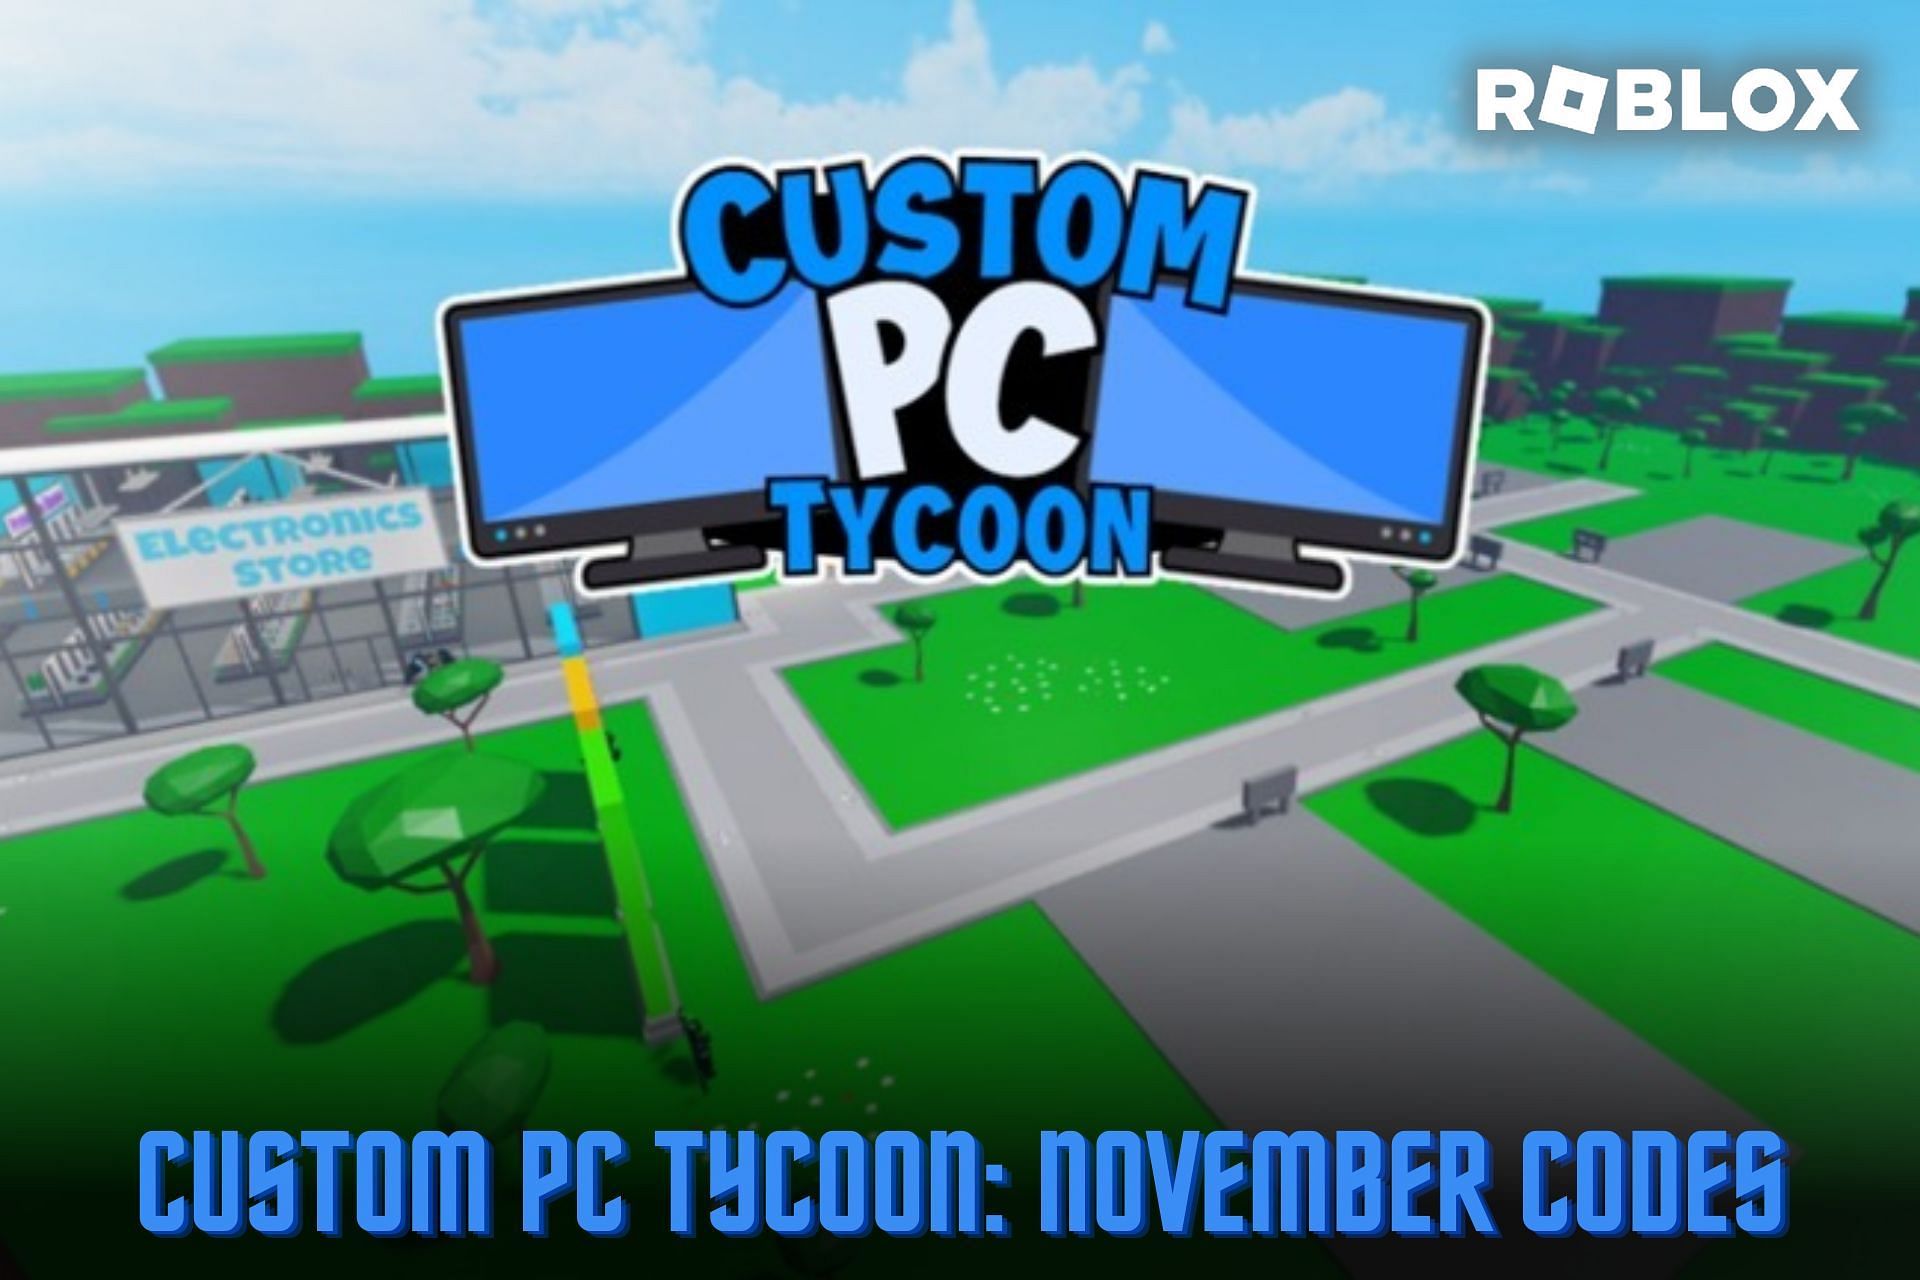 Roblox Custom PC Tycoon codes (December 2022)